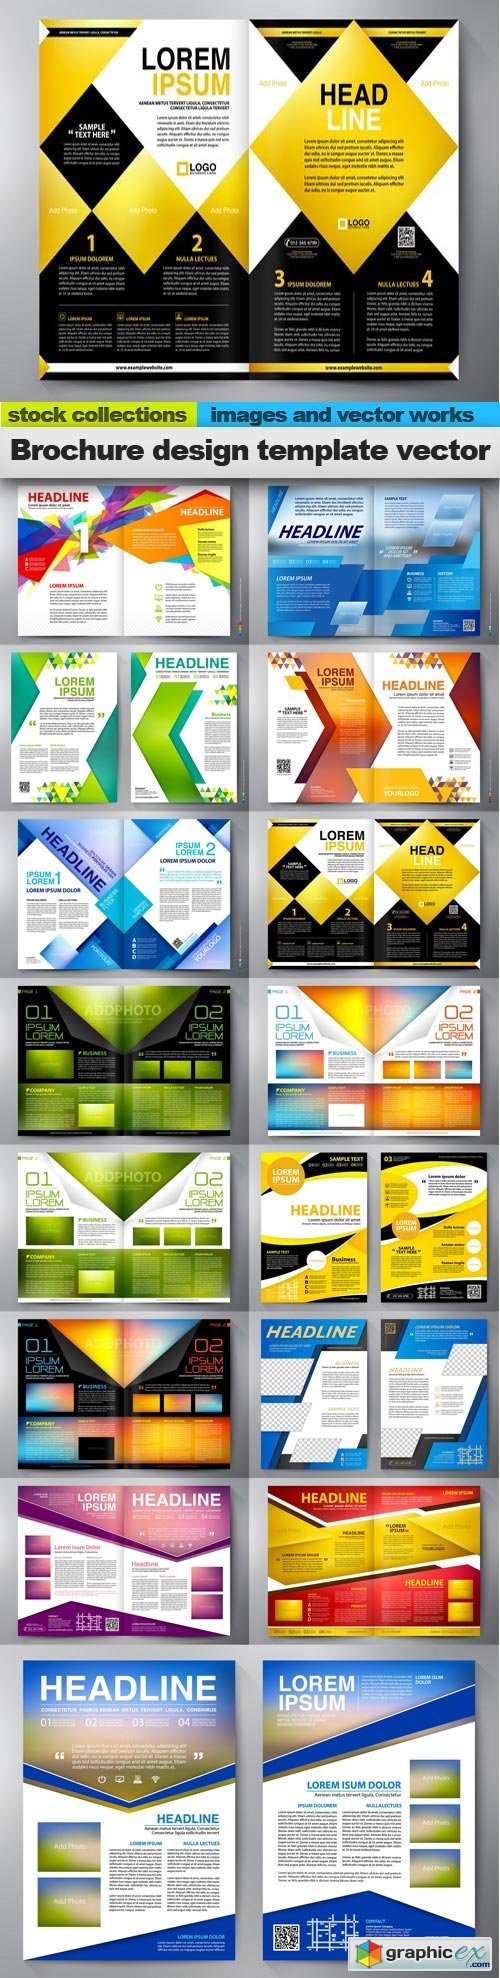 Brochure design template vector, 15 x EPS